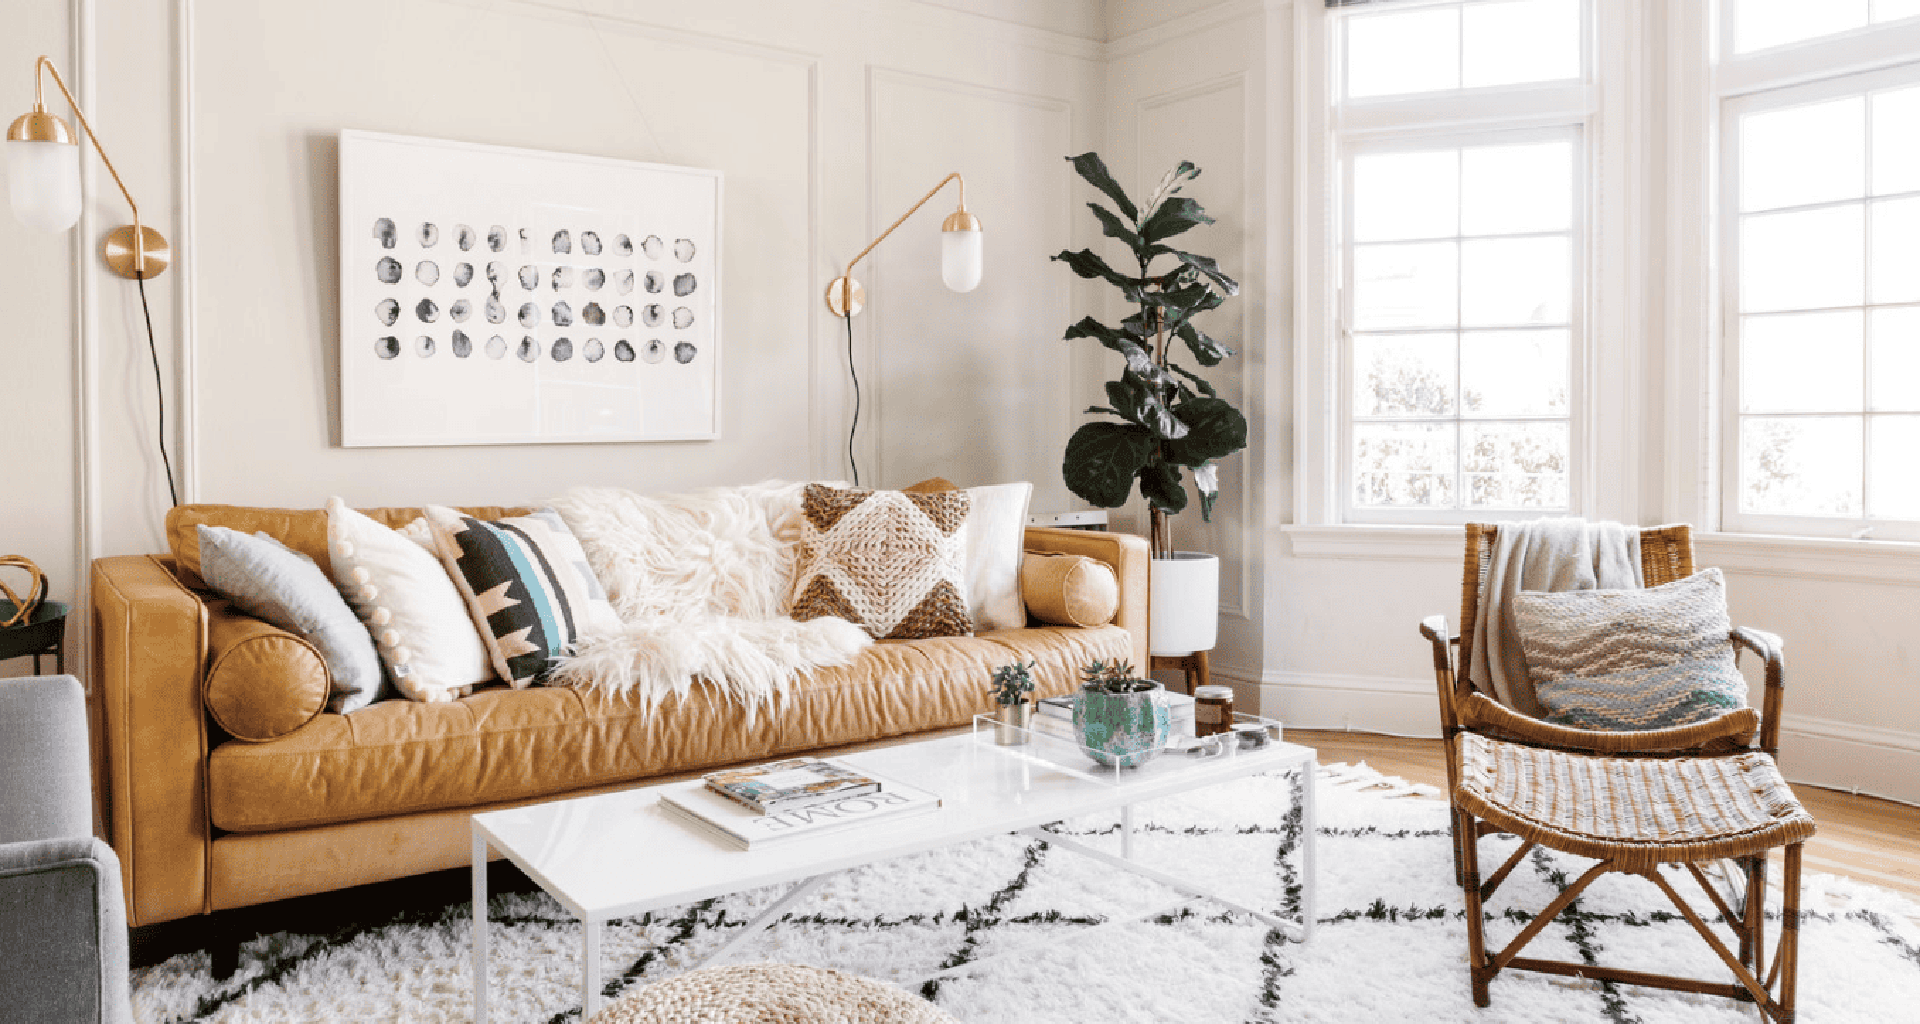 How To Choose Valances for Living Room Windows + 35 Ideas